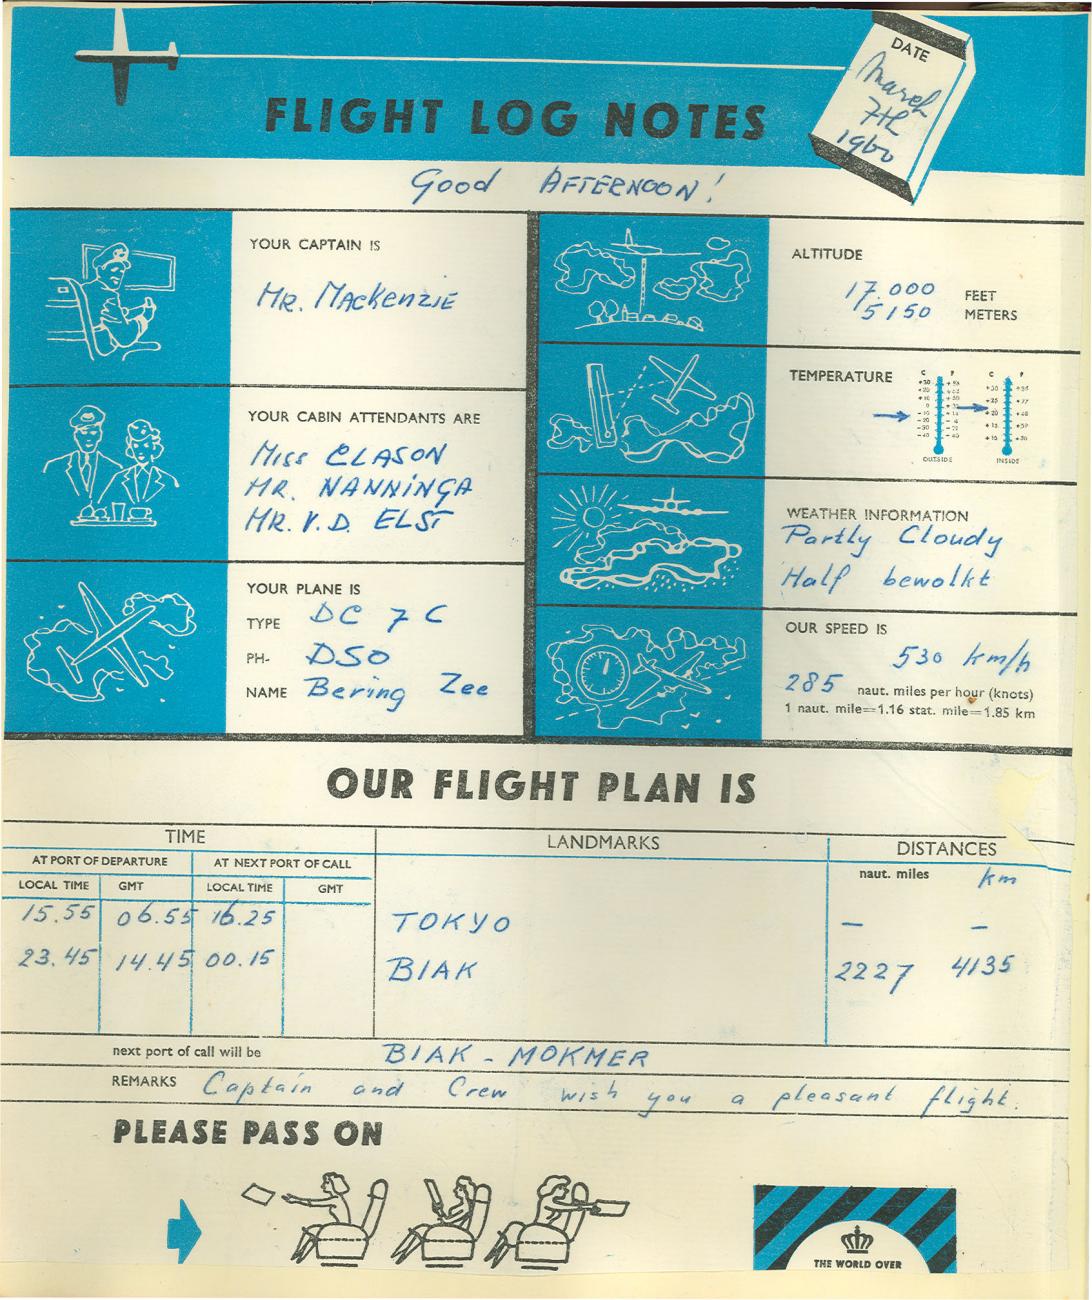 BD/83/4 - 
Flight details Tokio - Biak
